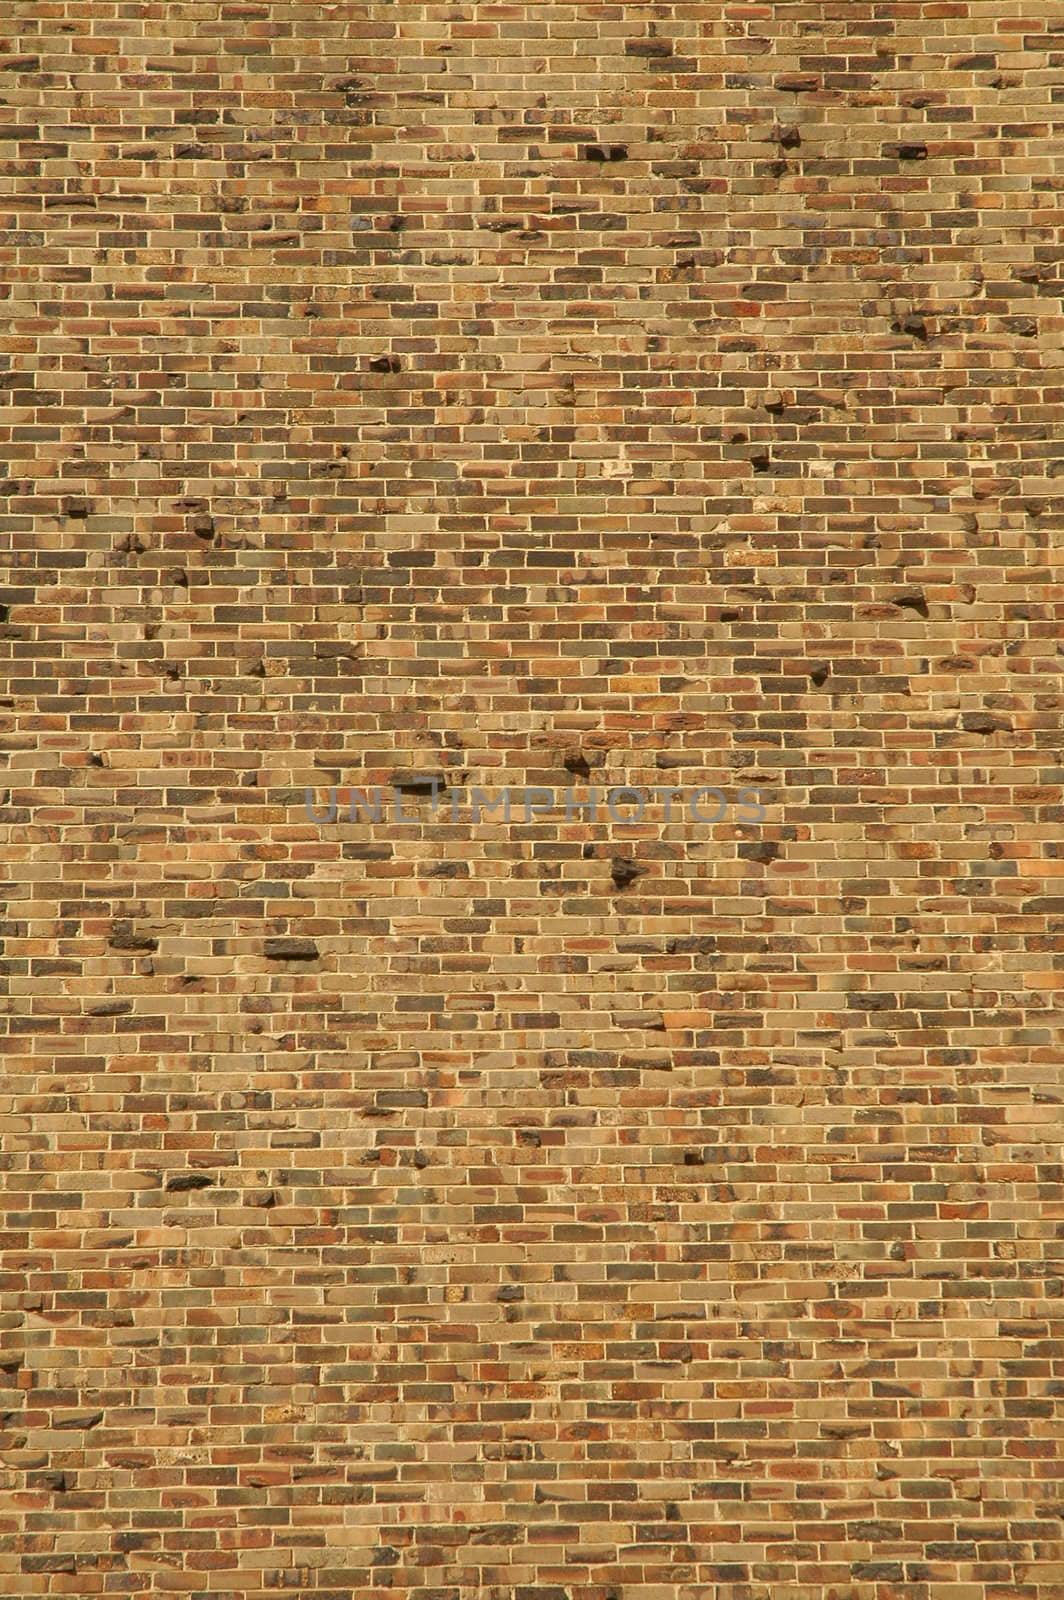 brick wall #2 by rorem